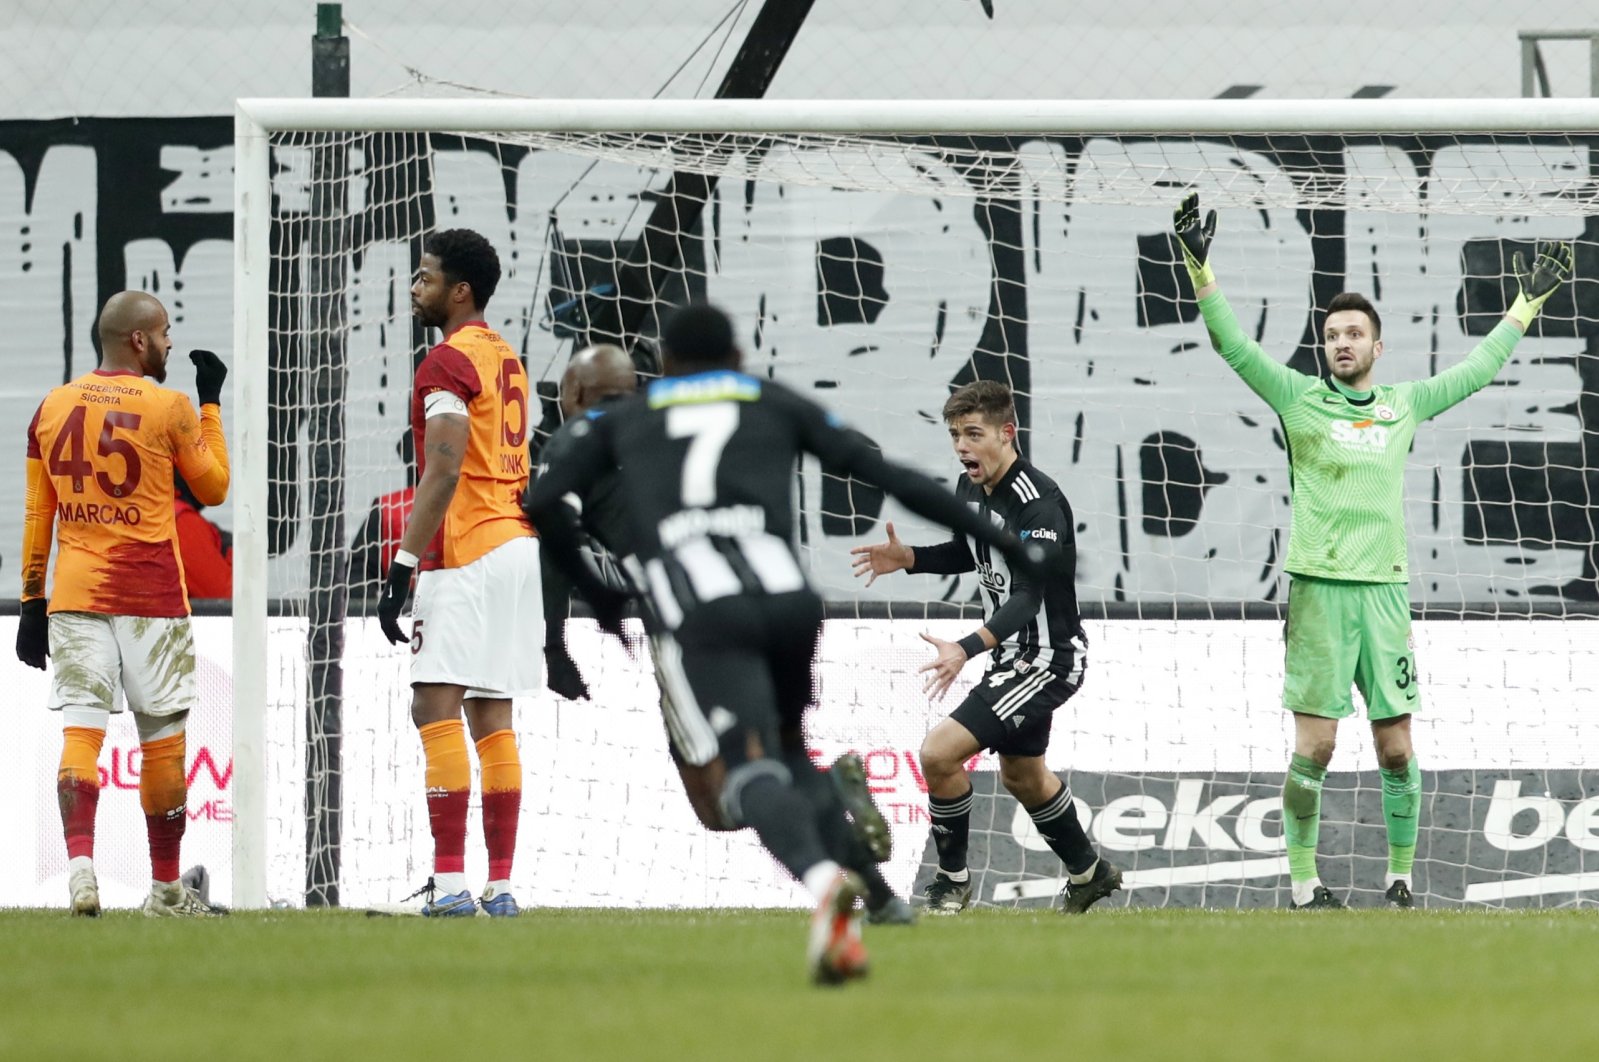 Beşiktaş players celebrate their first goal against Galatasaray scored by Souza at Vodafone Park, Istanbul, Turkey, Jan. 17, 2021. (Reuters Photo)